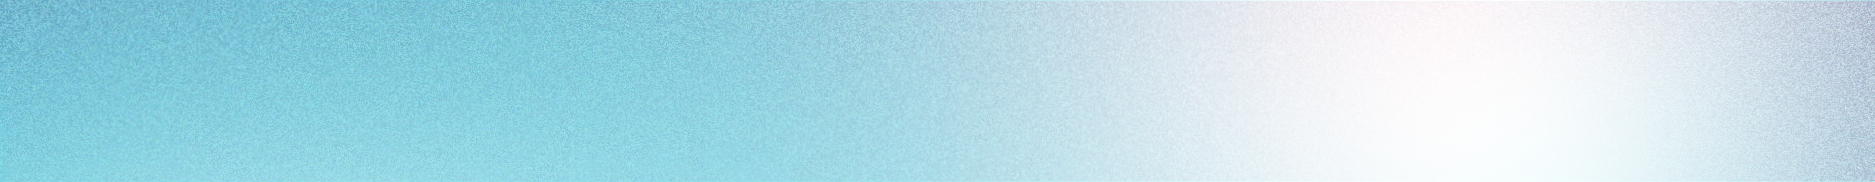 blue transparant gradient